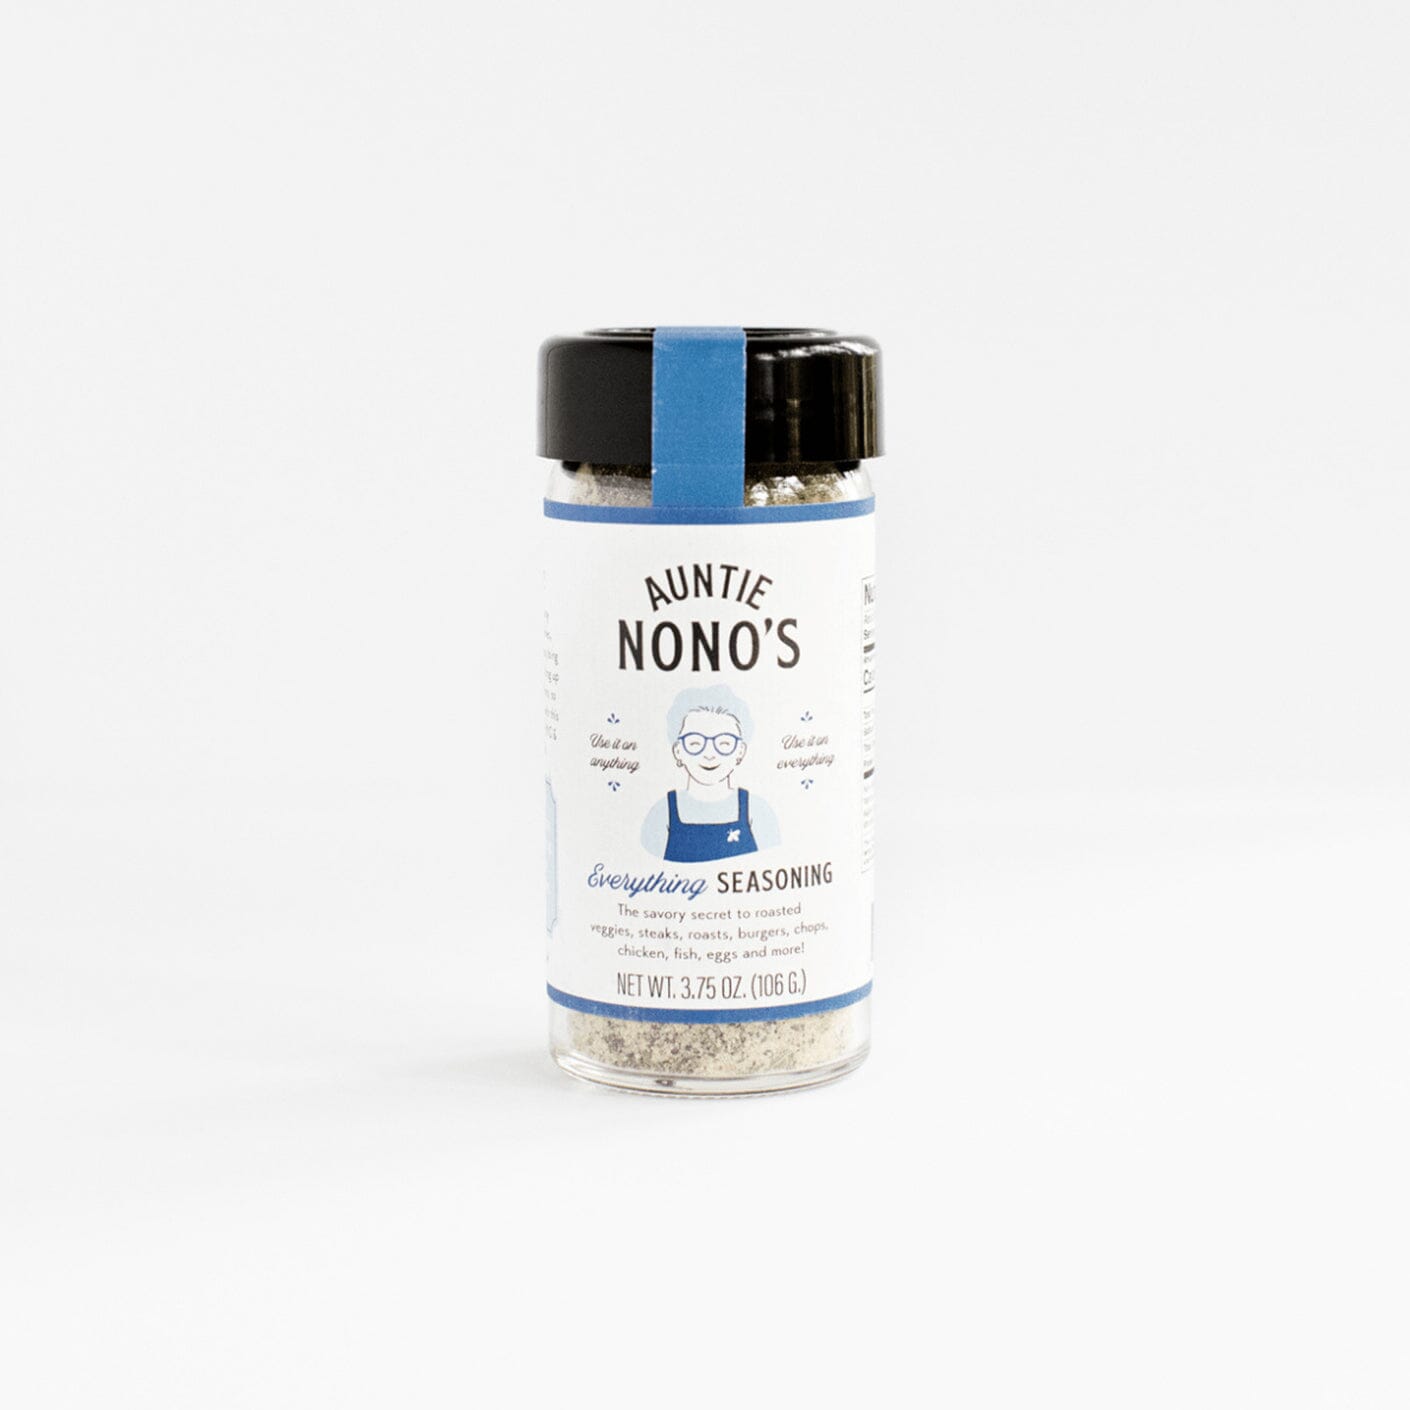 Auntie Nono's Steakhouse Seasoned SE33 Salt, All-Natural Gluten-Free  Seasoning for Steaks, Pork, Veggies, and Burgers, 8 oz. 